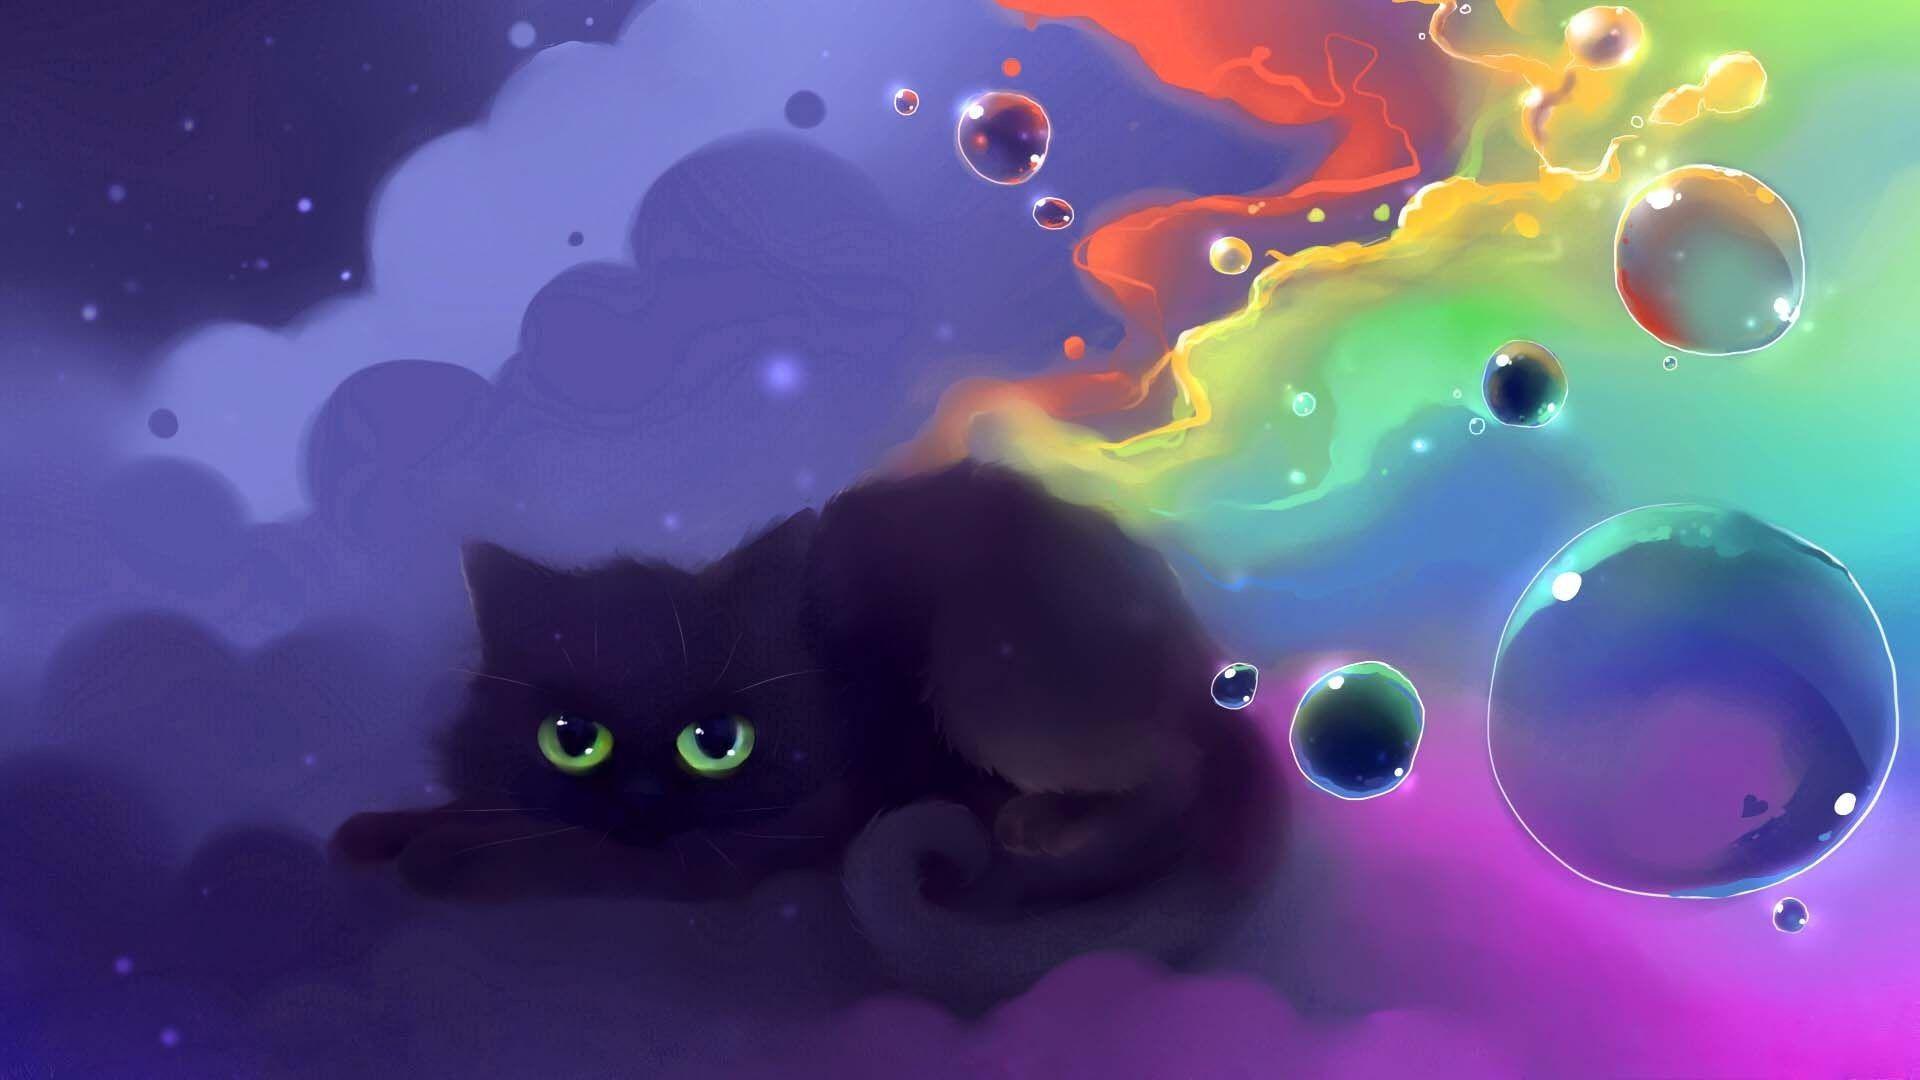 Black Cat Cartoon Wallpapers - Top Free Black Cat Cartoon Backgrounds